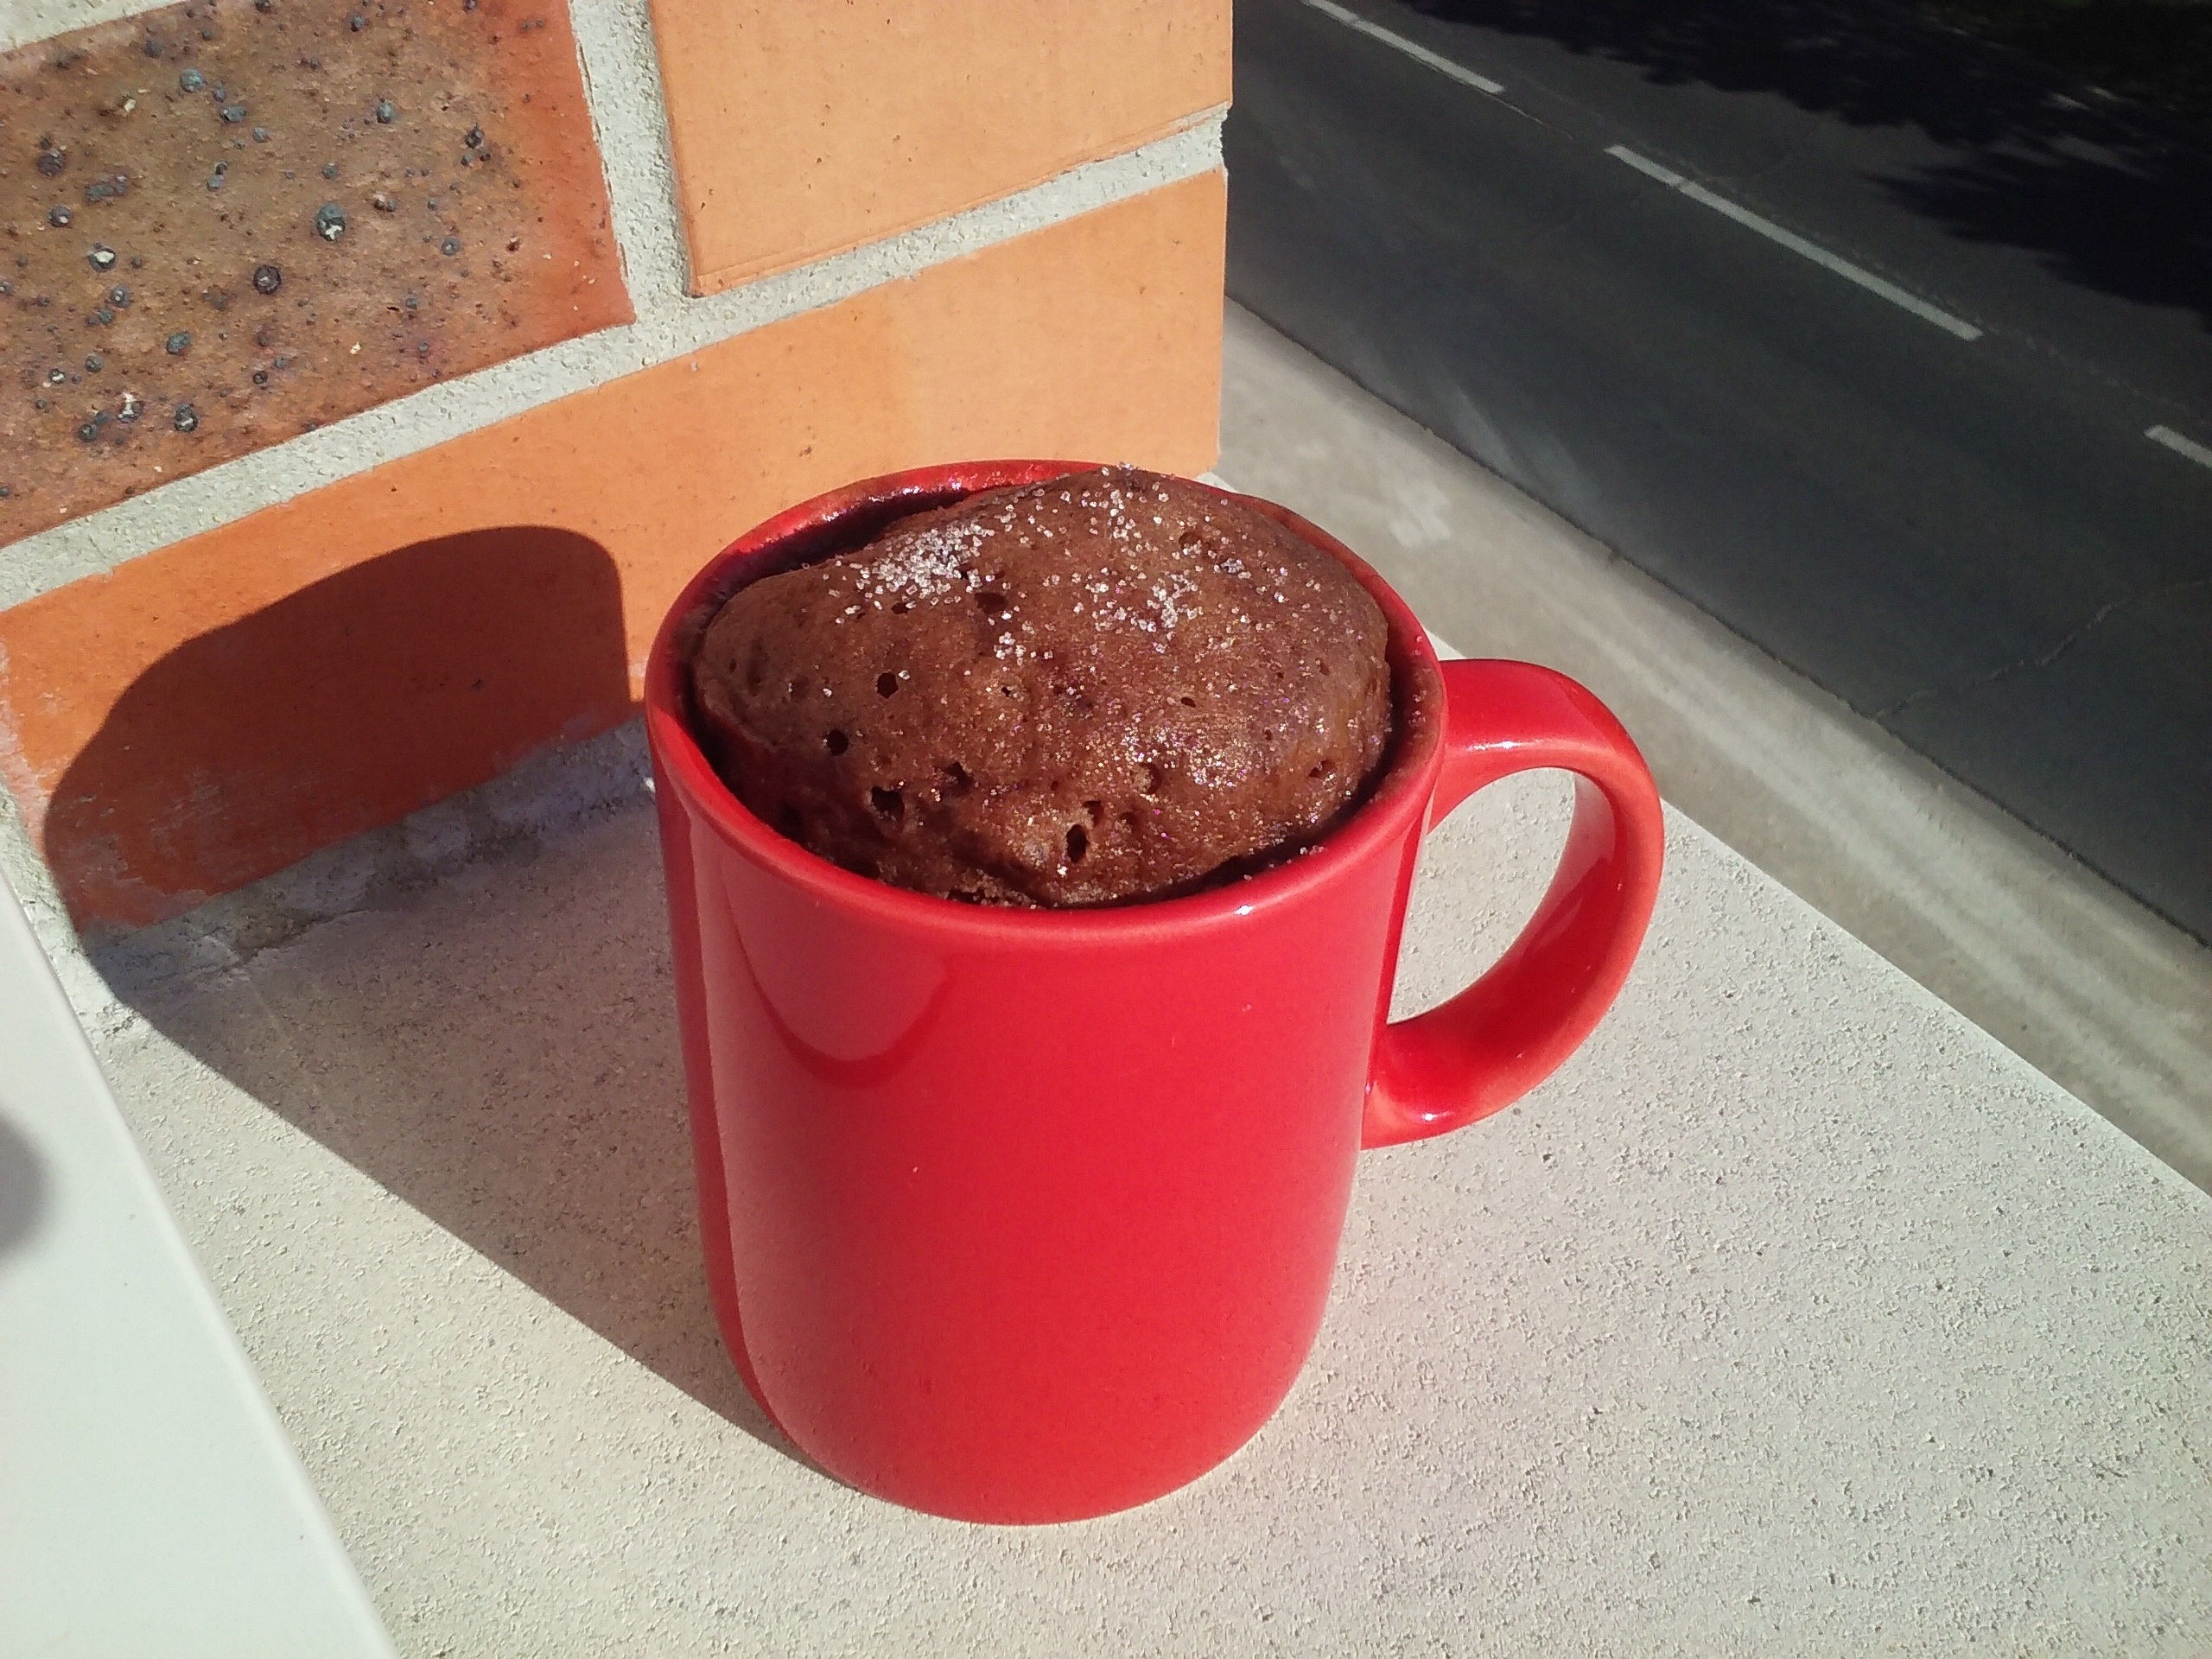 A chocolate cake baked in a mug